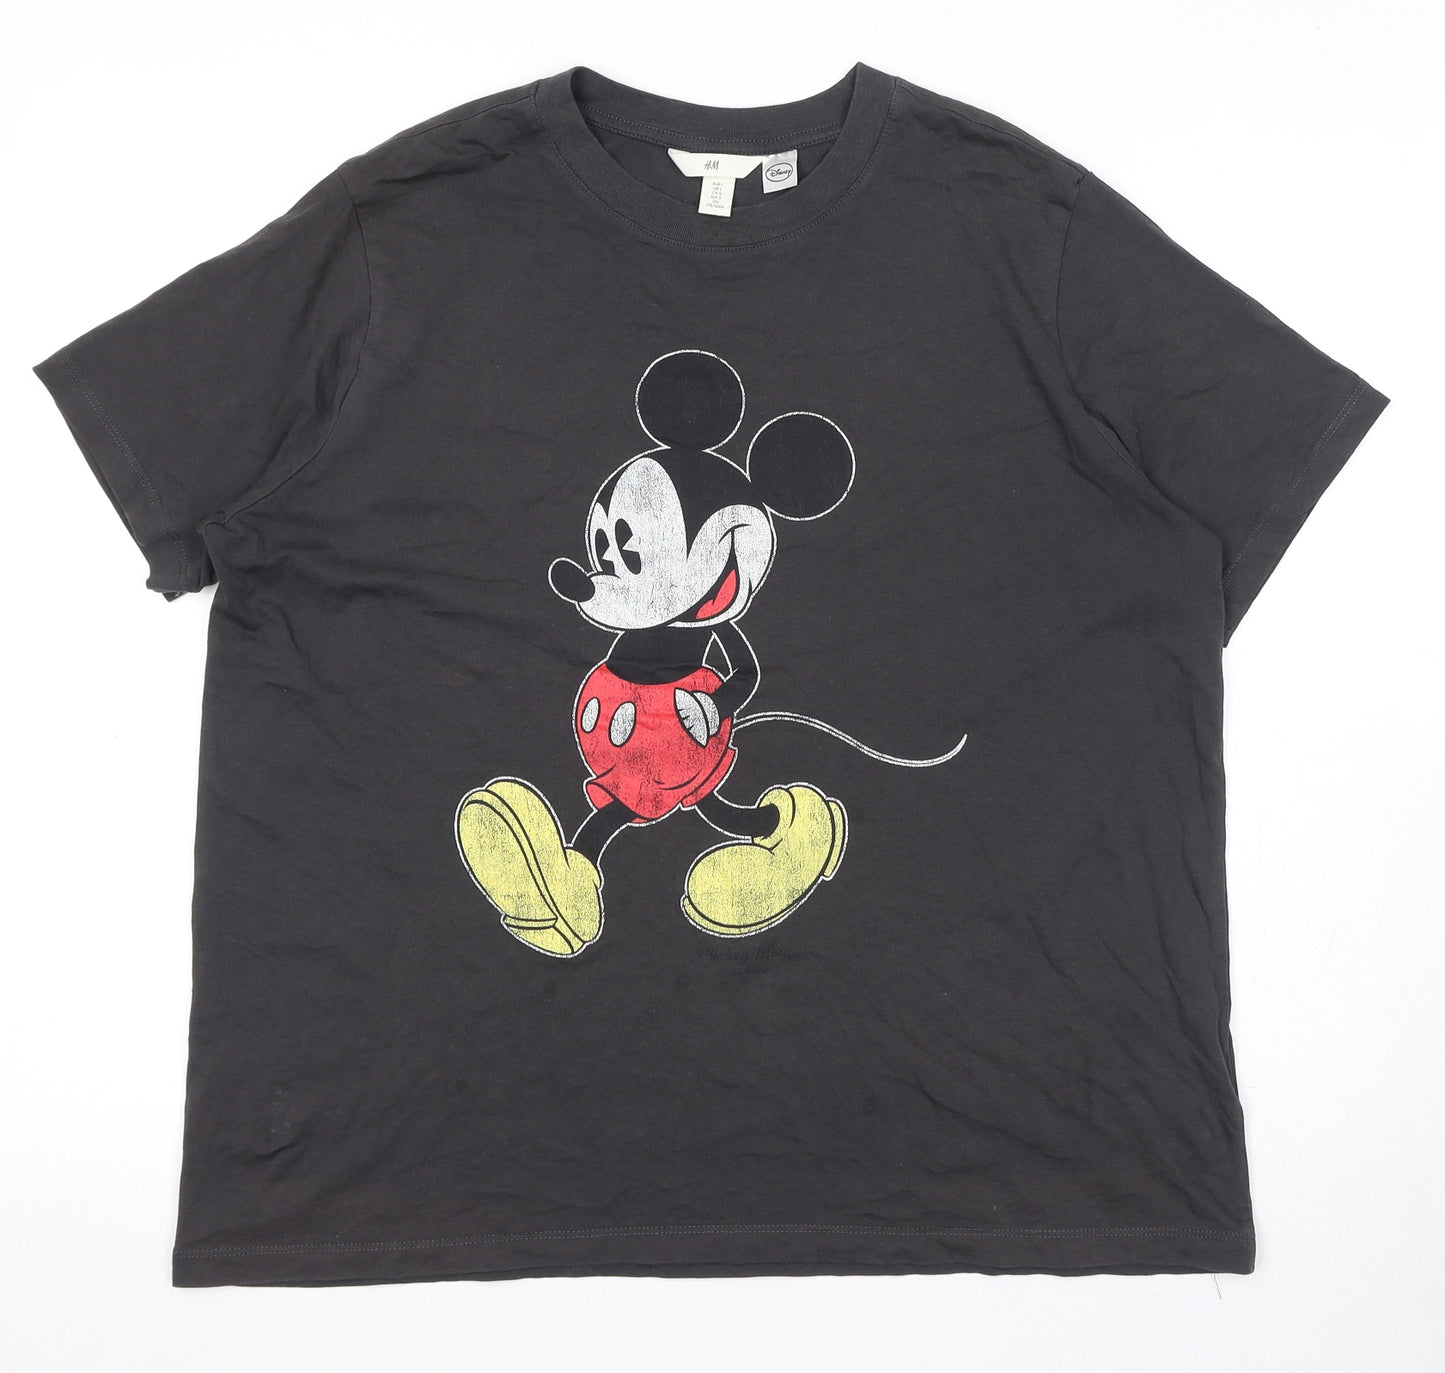 H&M Mens Black Cotton T-Shirt Size L Crew Neck - Mickey Mouse